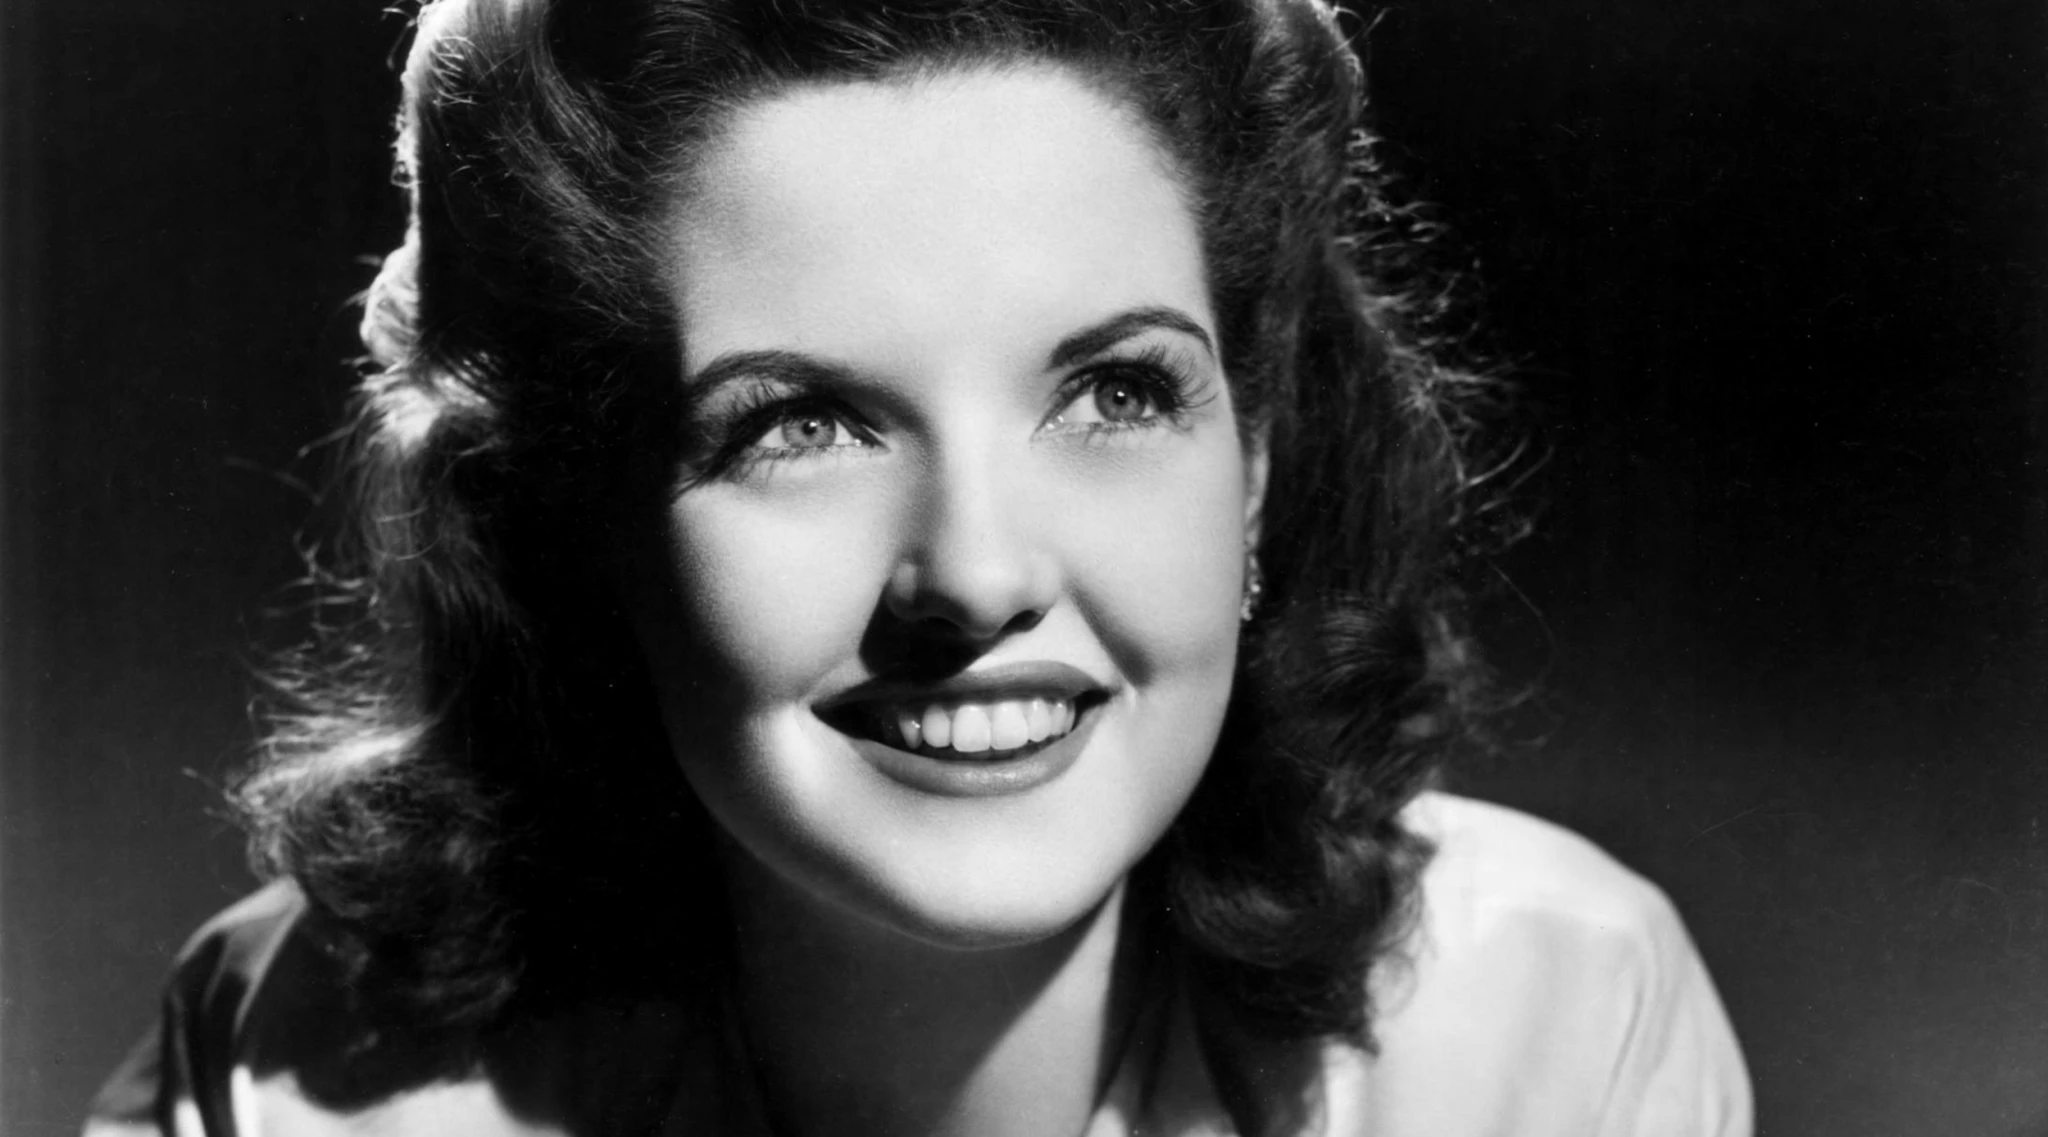 Virginia Patton Moss, 'It's a Wonderful Life' Actress, Dies at 97